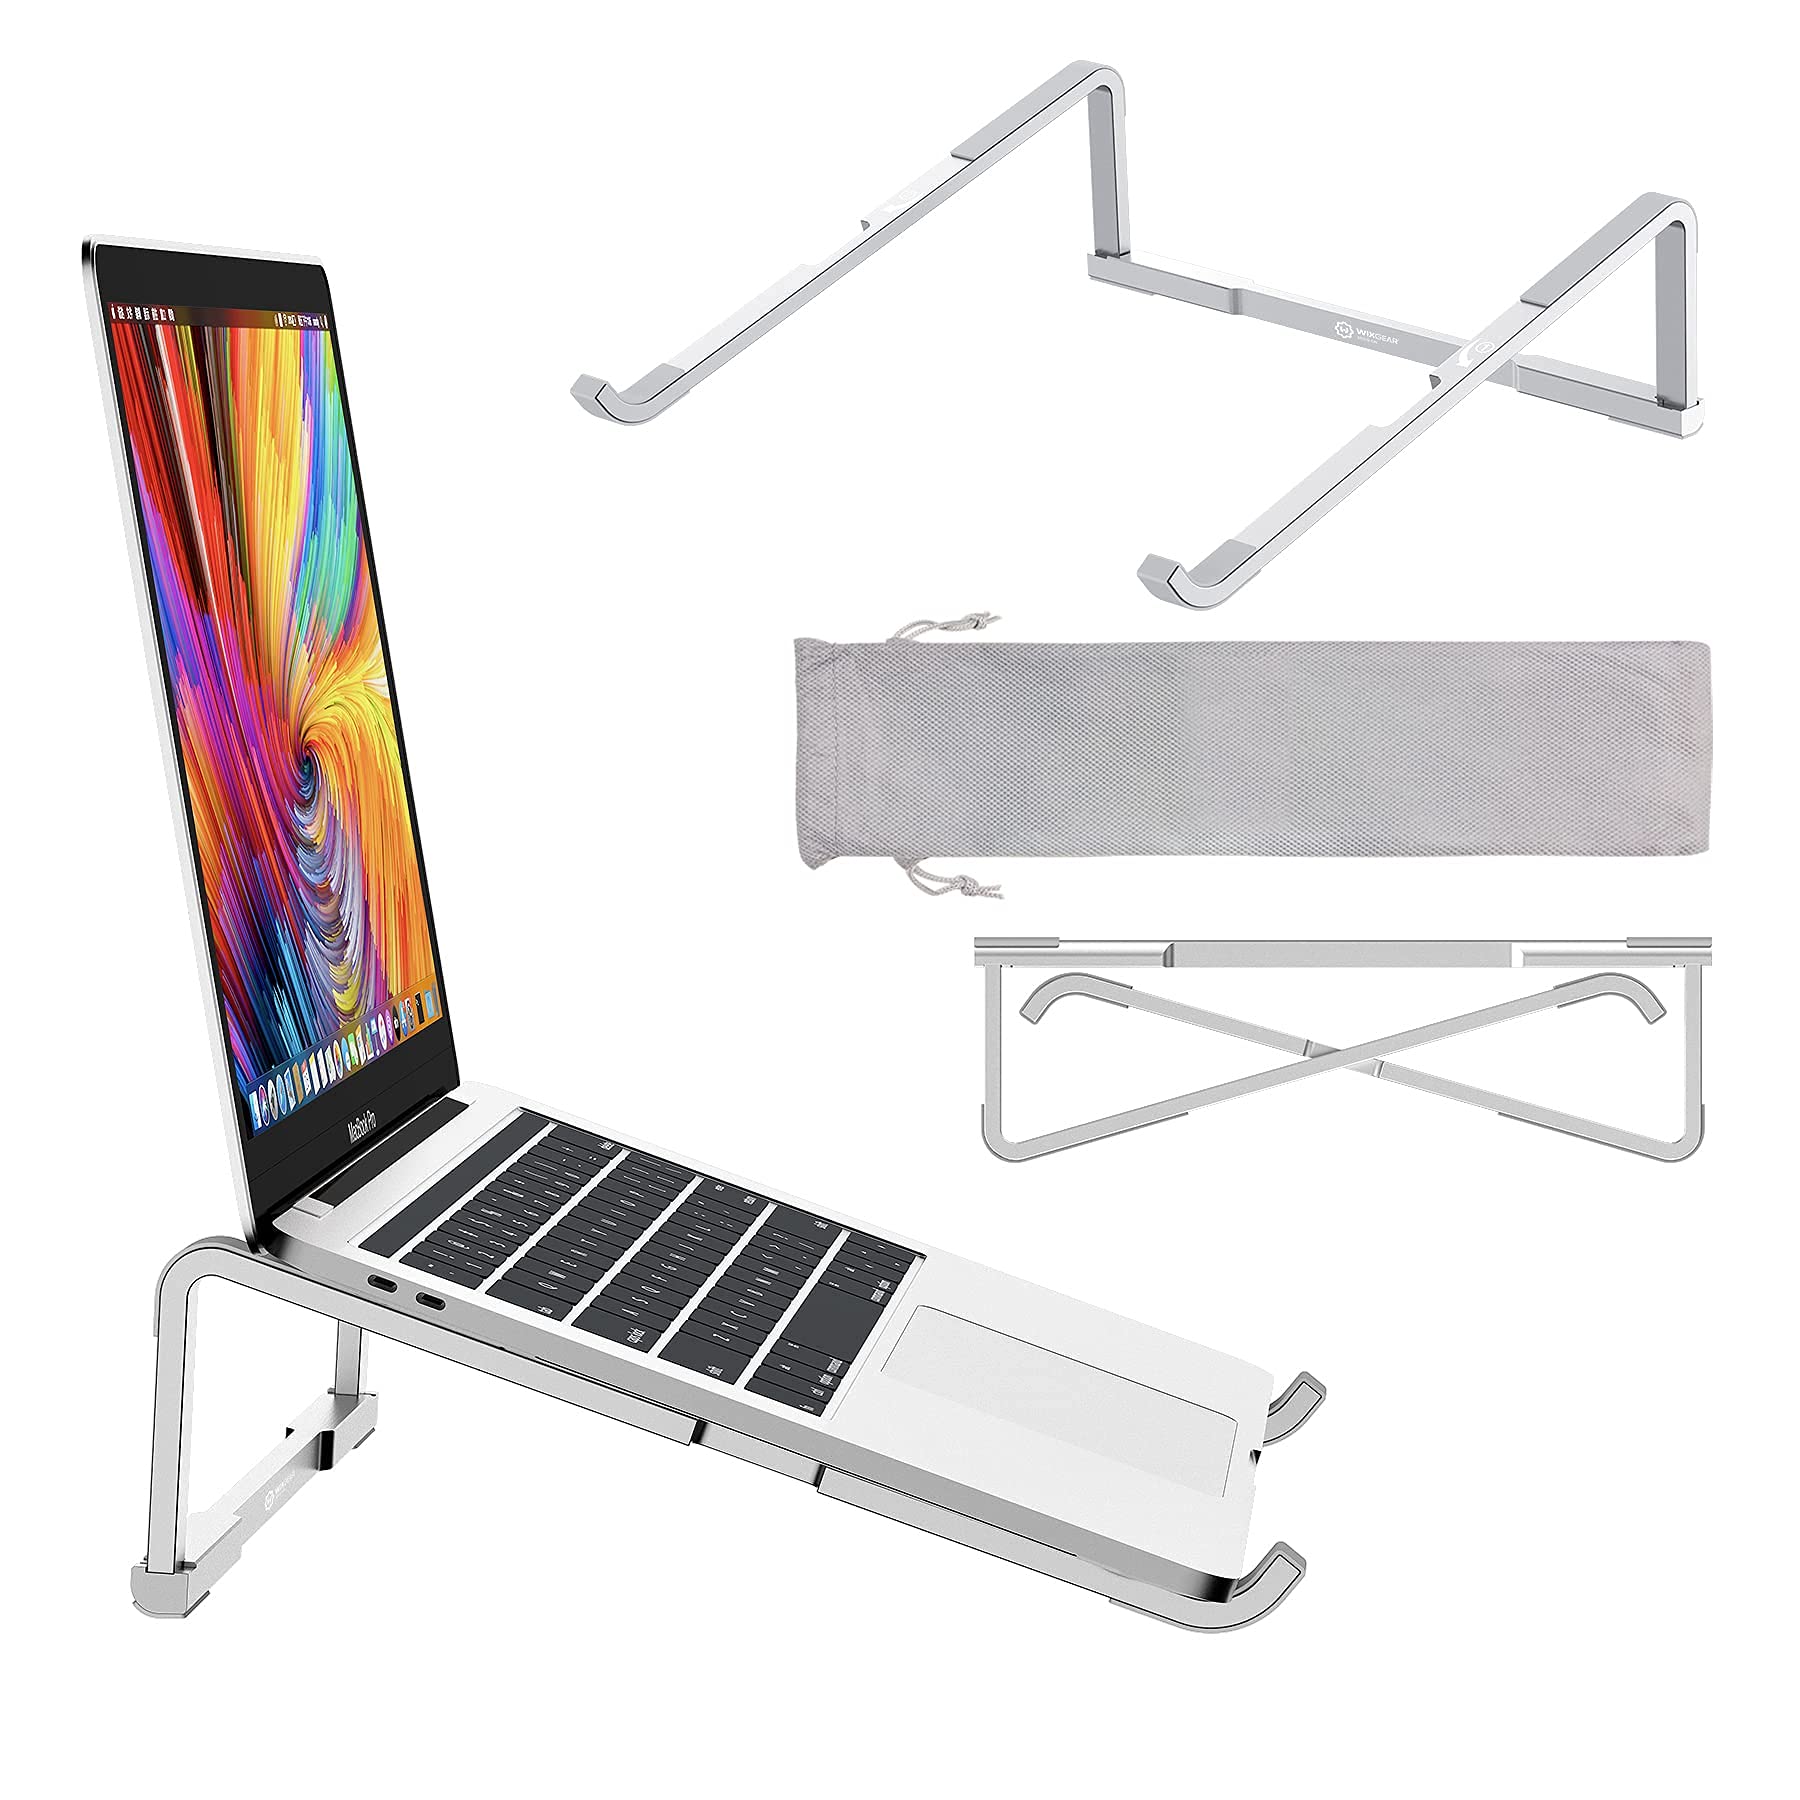 Portable Metal Aluminium alloy Vertical Stand Desktop Notebook Stand Holder  Support for MacBook Pro Air 13 Retina iPad Computer